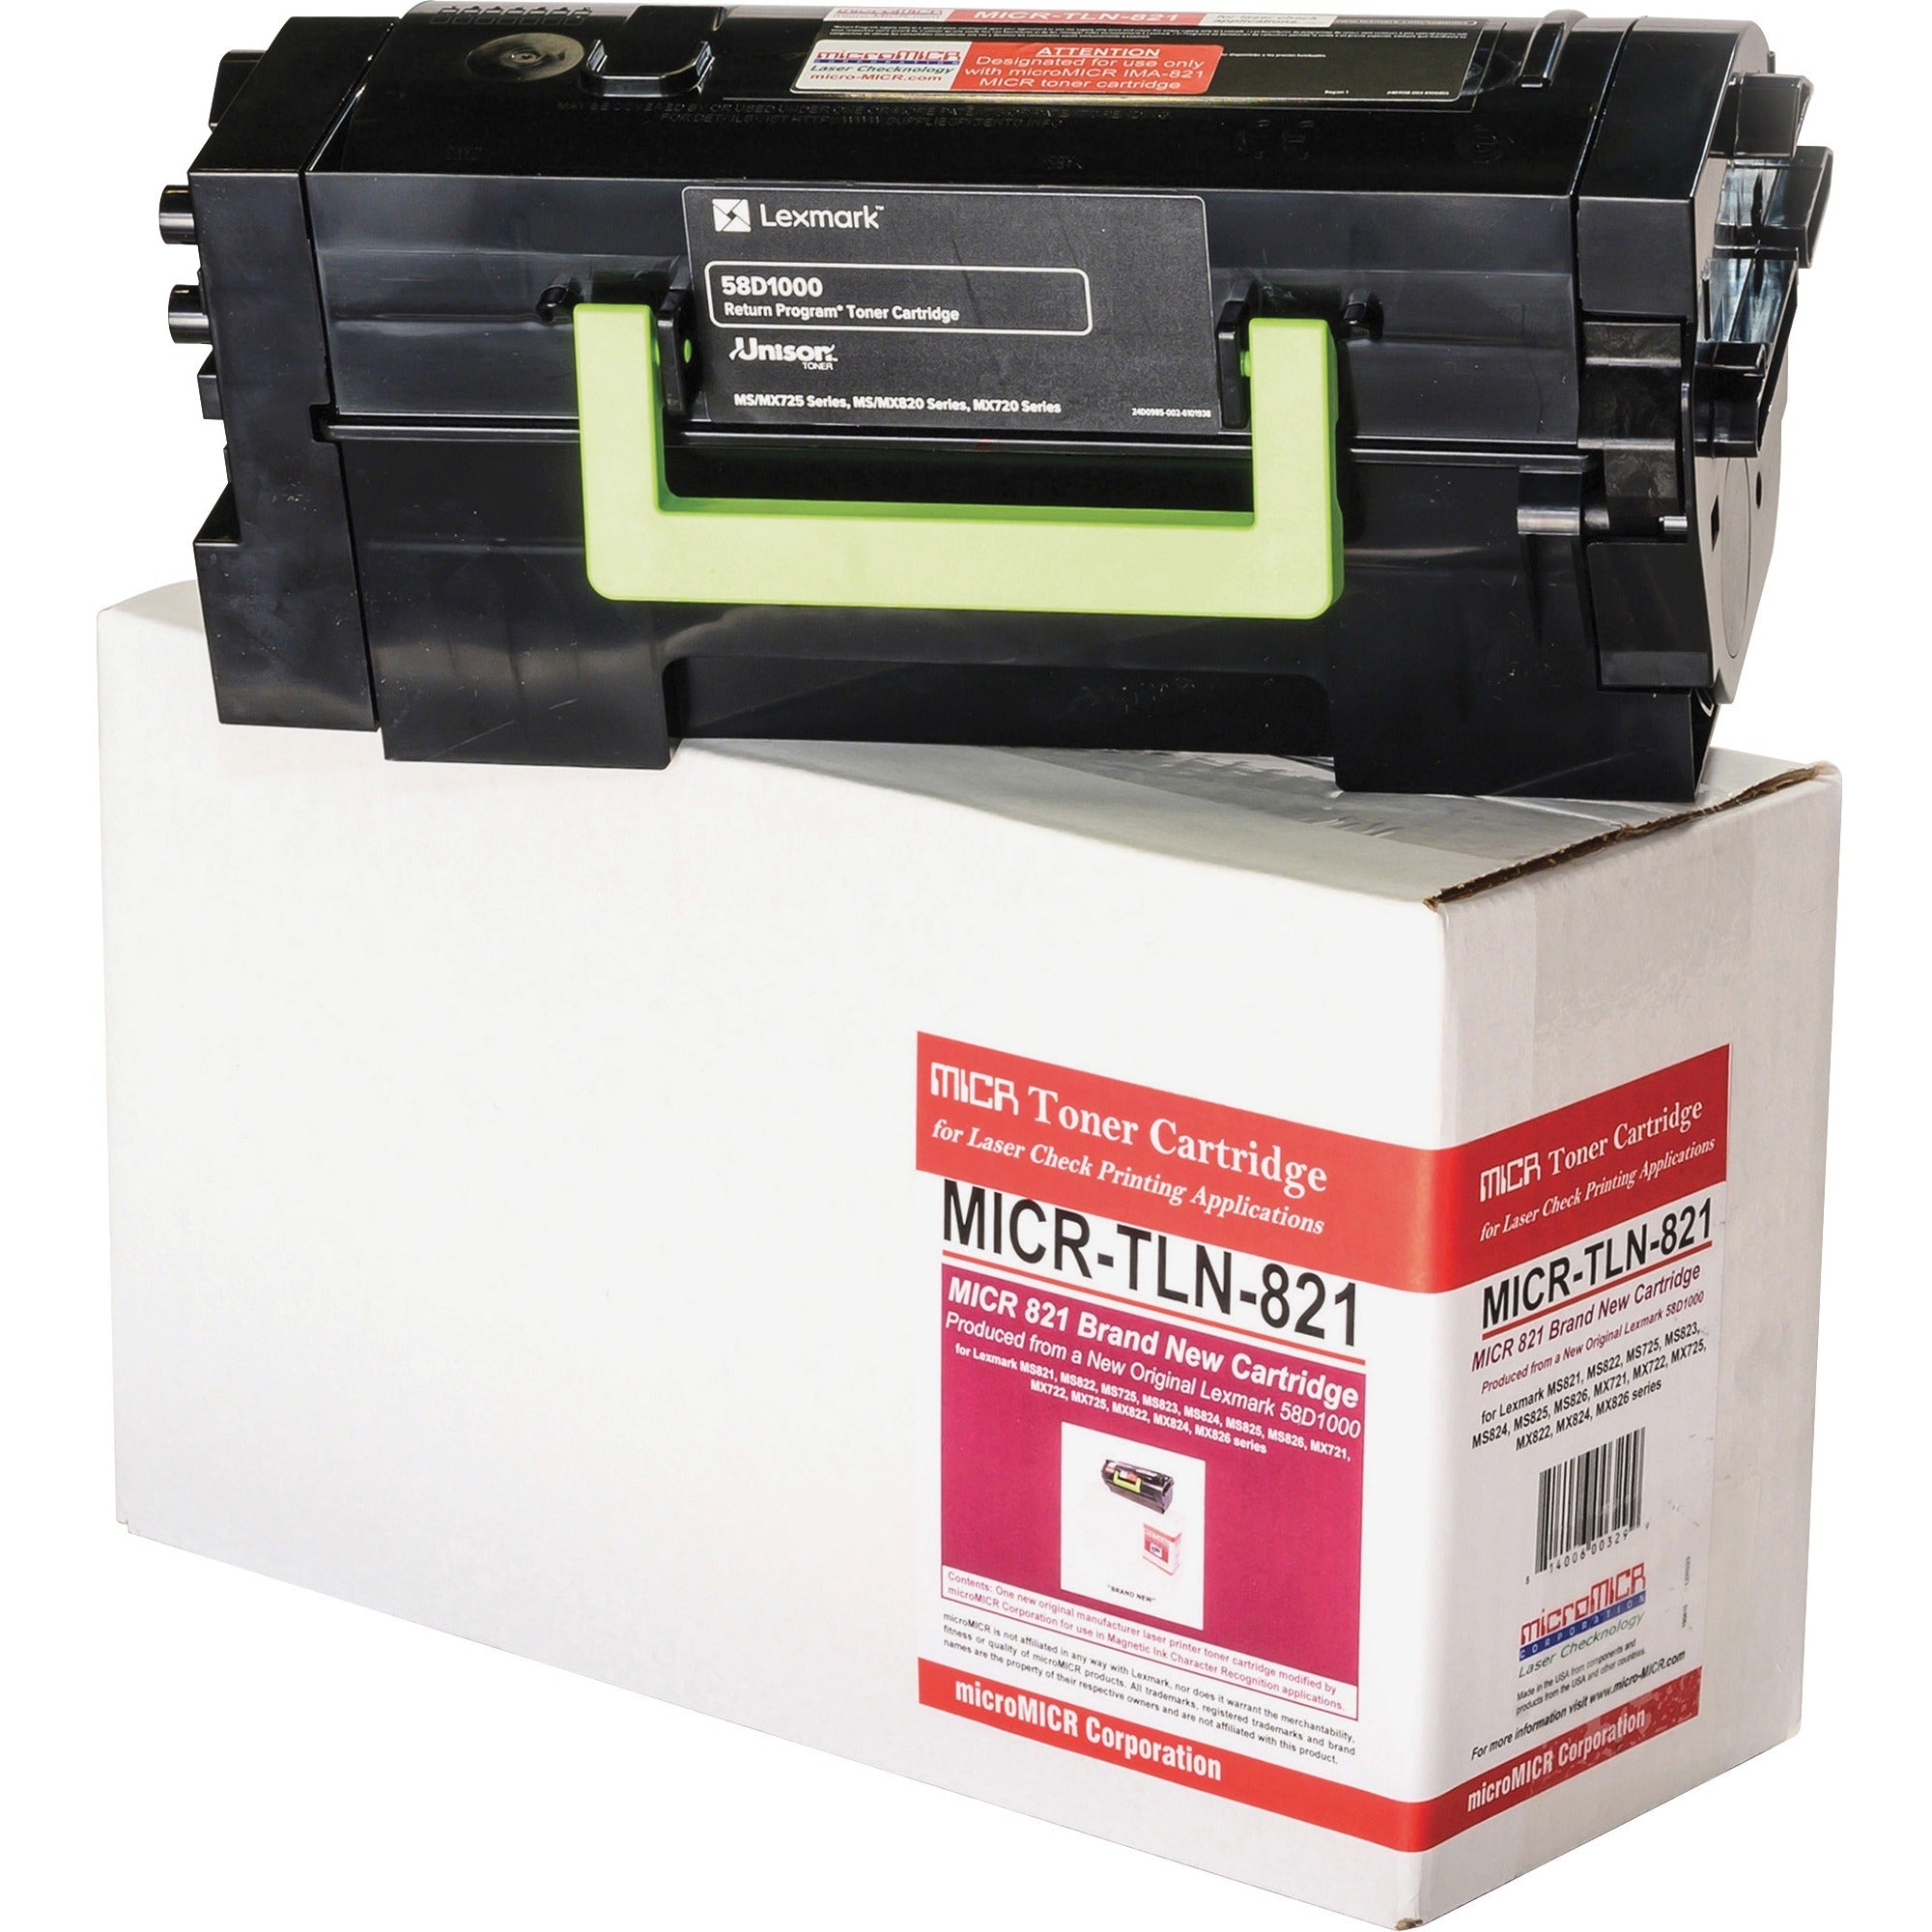 micromicr-micr-laser-toner-cartridge-alternative-for-lexmark-58d1000-black-1-each-7500-pages_mcmmicrtln821 - 1